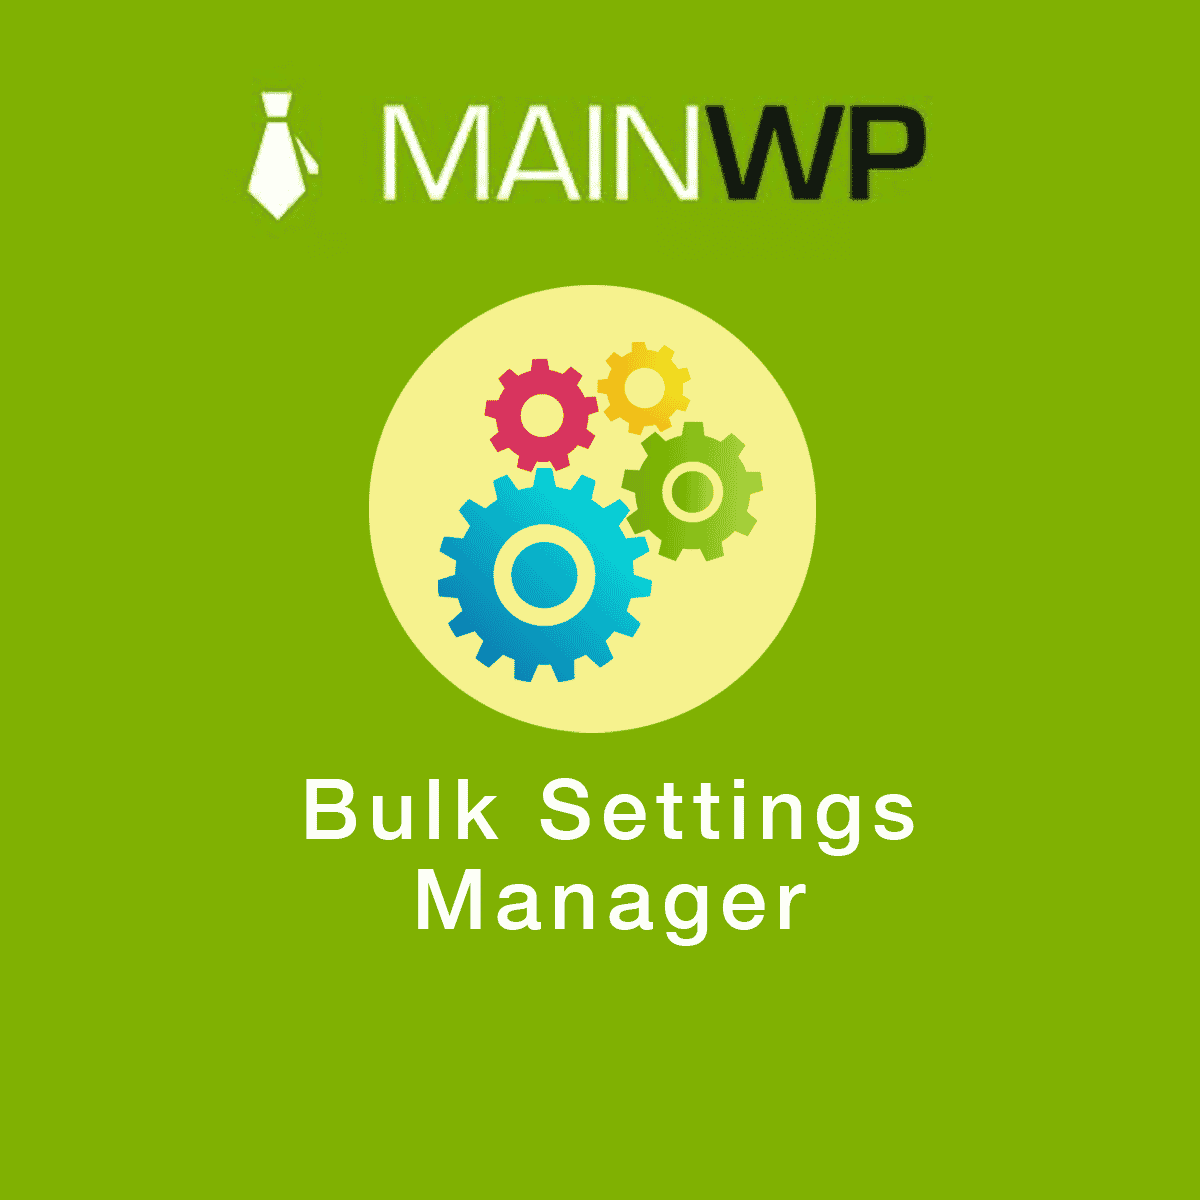 دانلود افزونه وردپرس MainWP Bulk Settings Manager